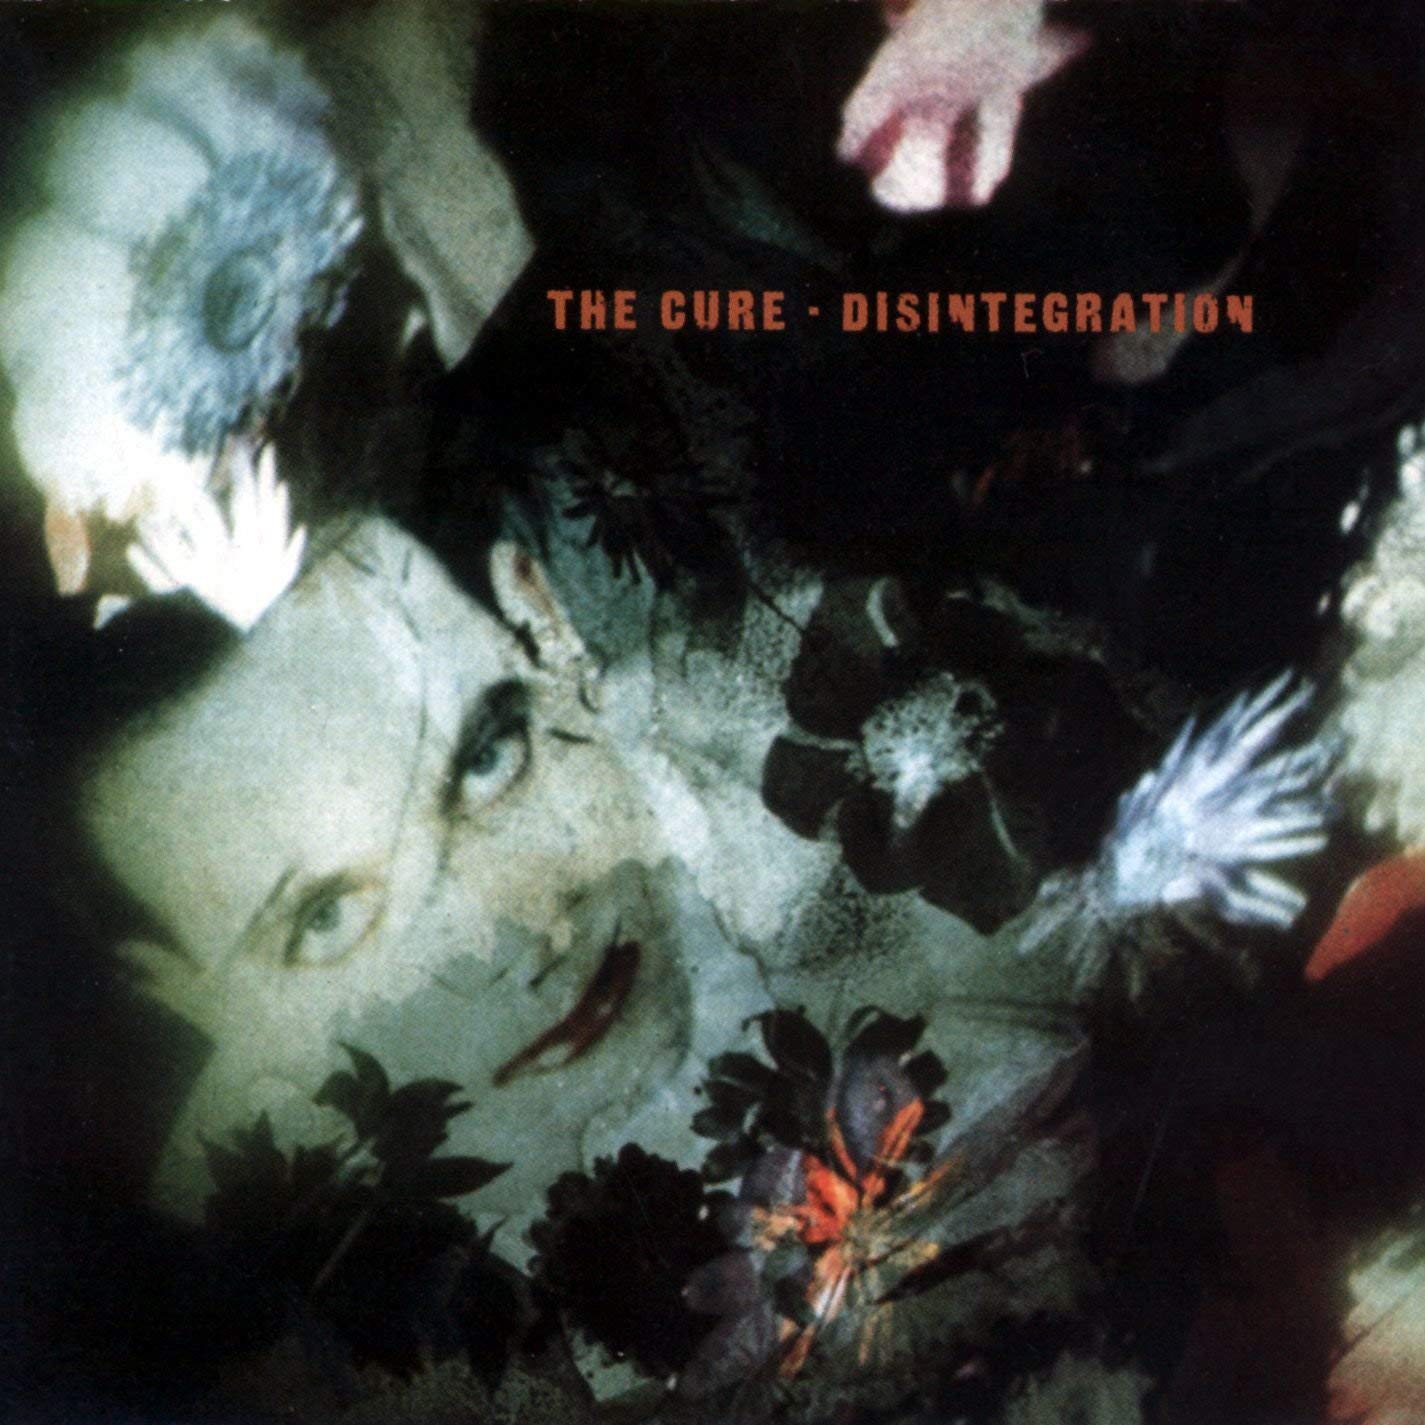 Disintegration - The Cure Album Art